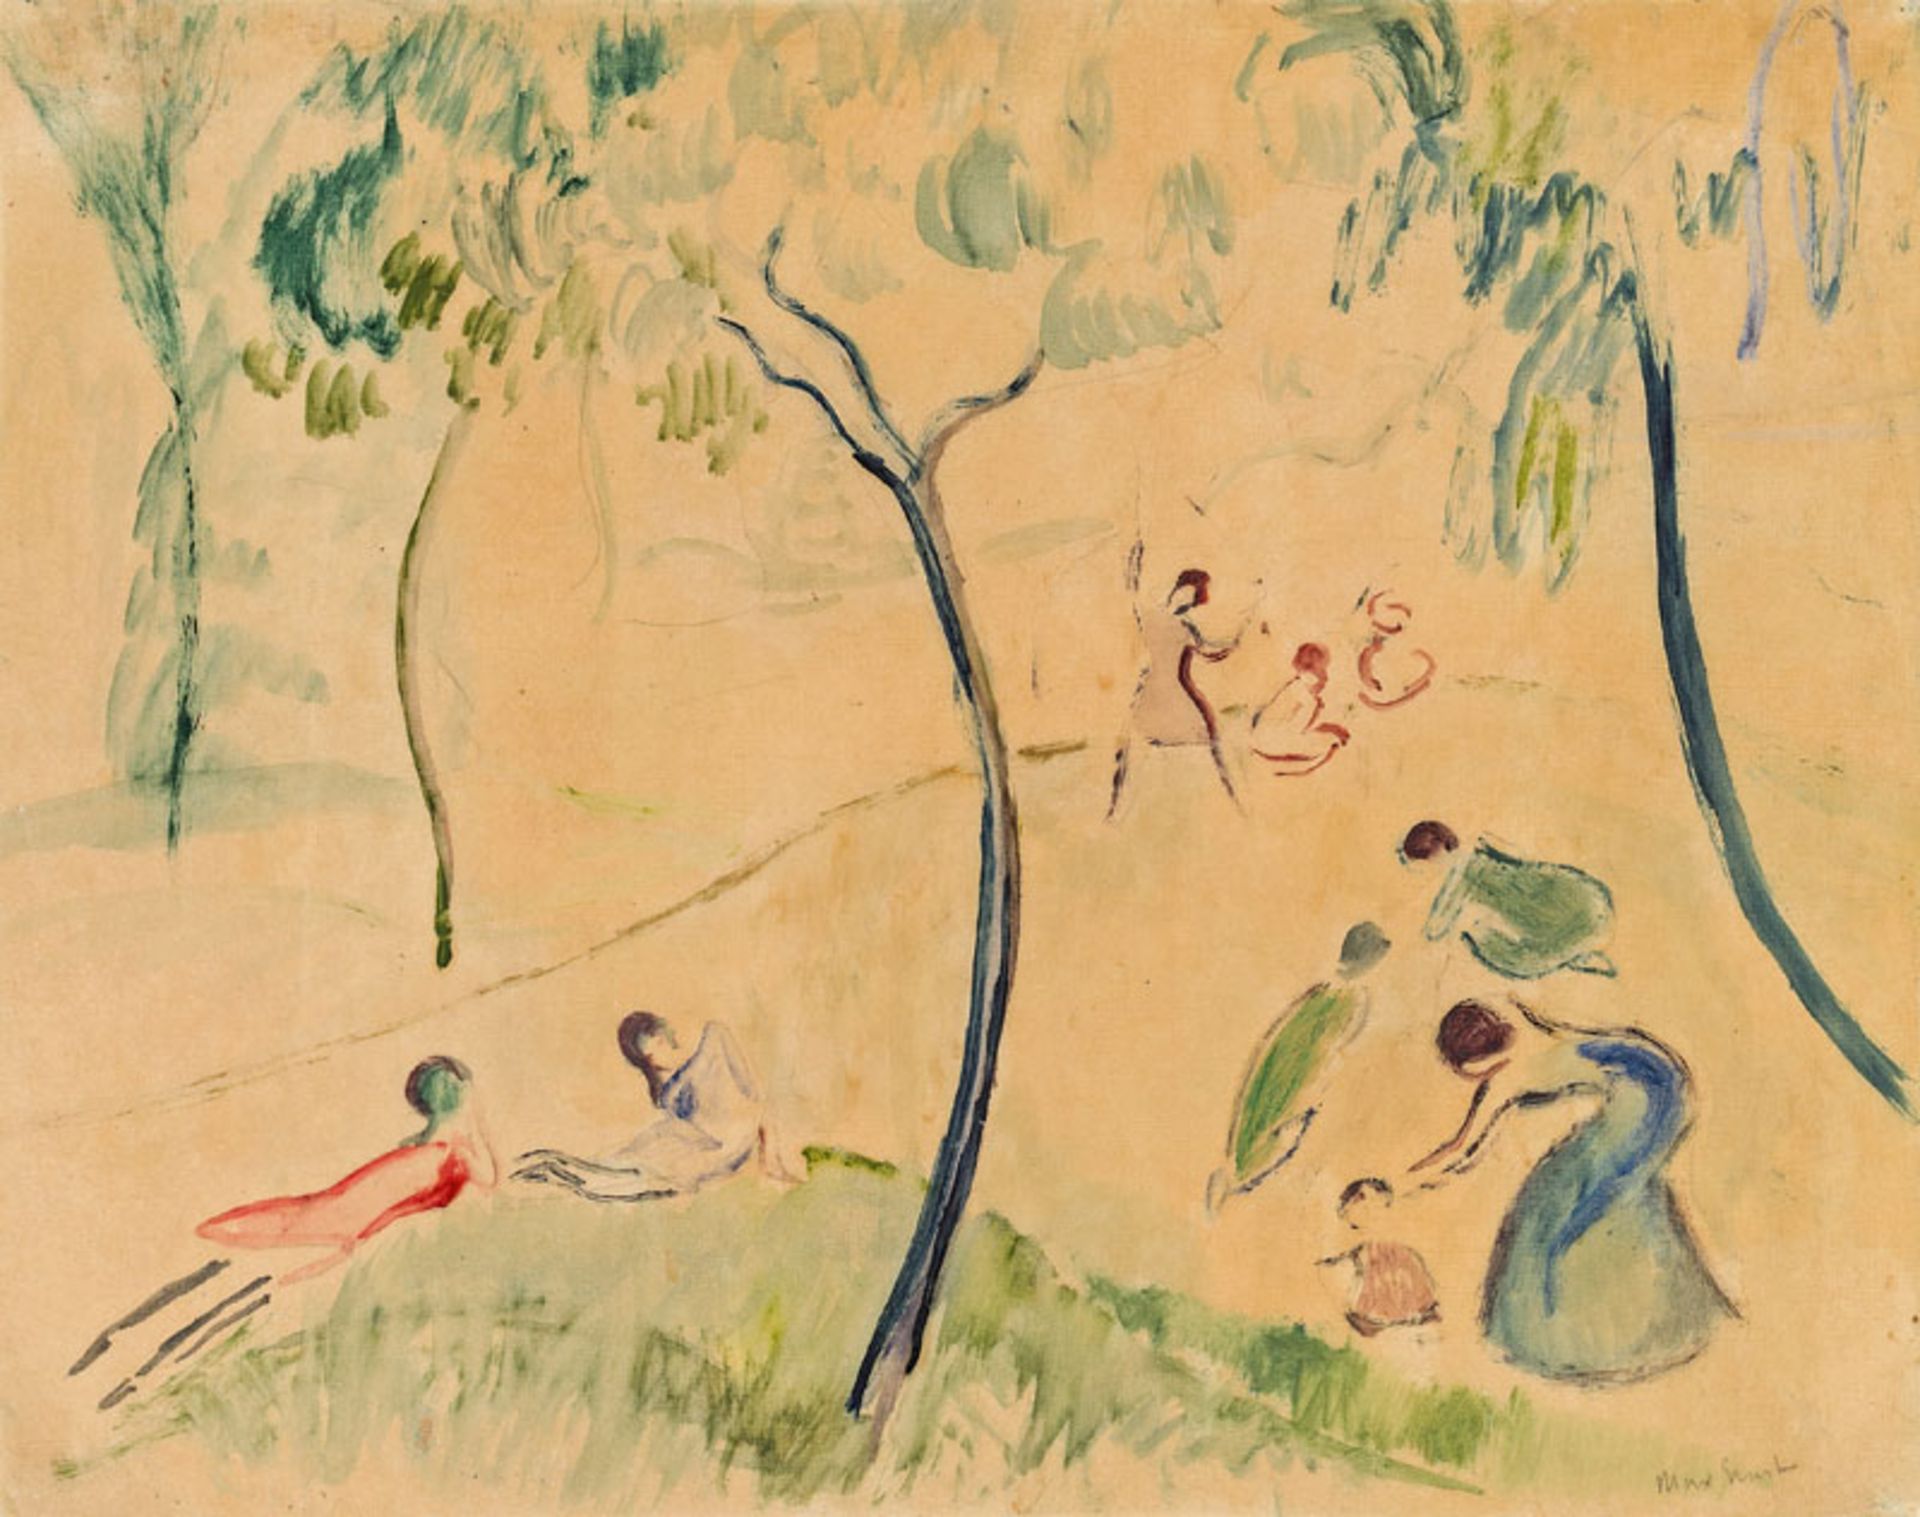 Max Ernst *Park scenery, ca. 1913 watercolour on paper; 28.6 × 35.9 cm

Max Ernst *Szene im Park, um